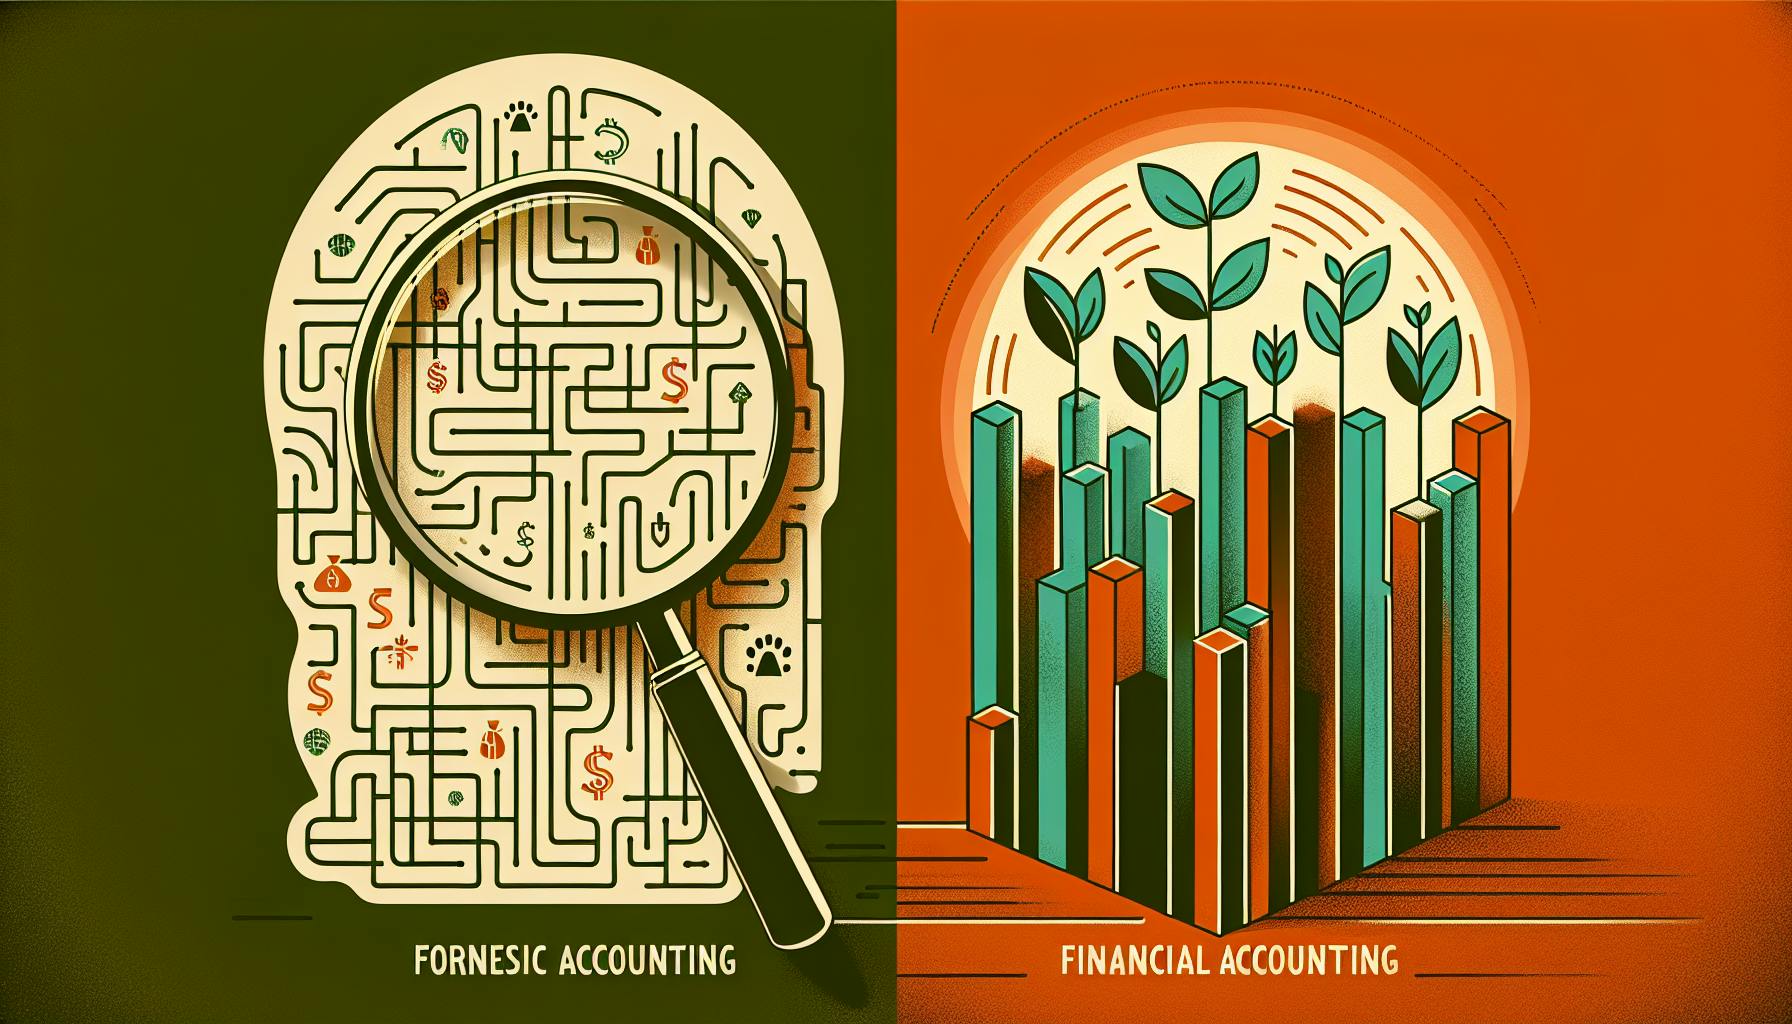 Forensic Accounting vs Financial Accounting